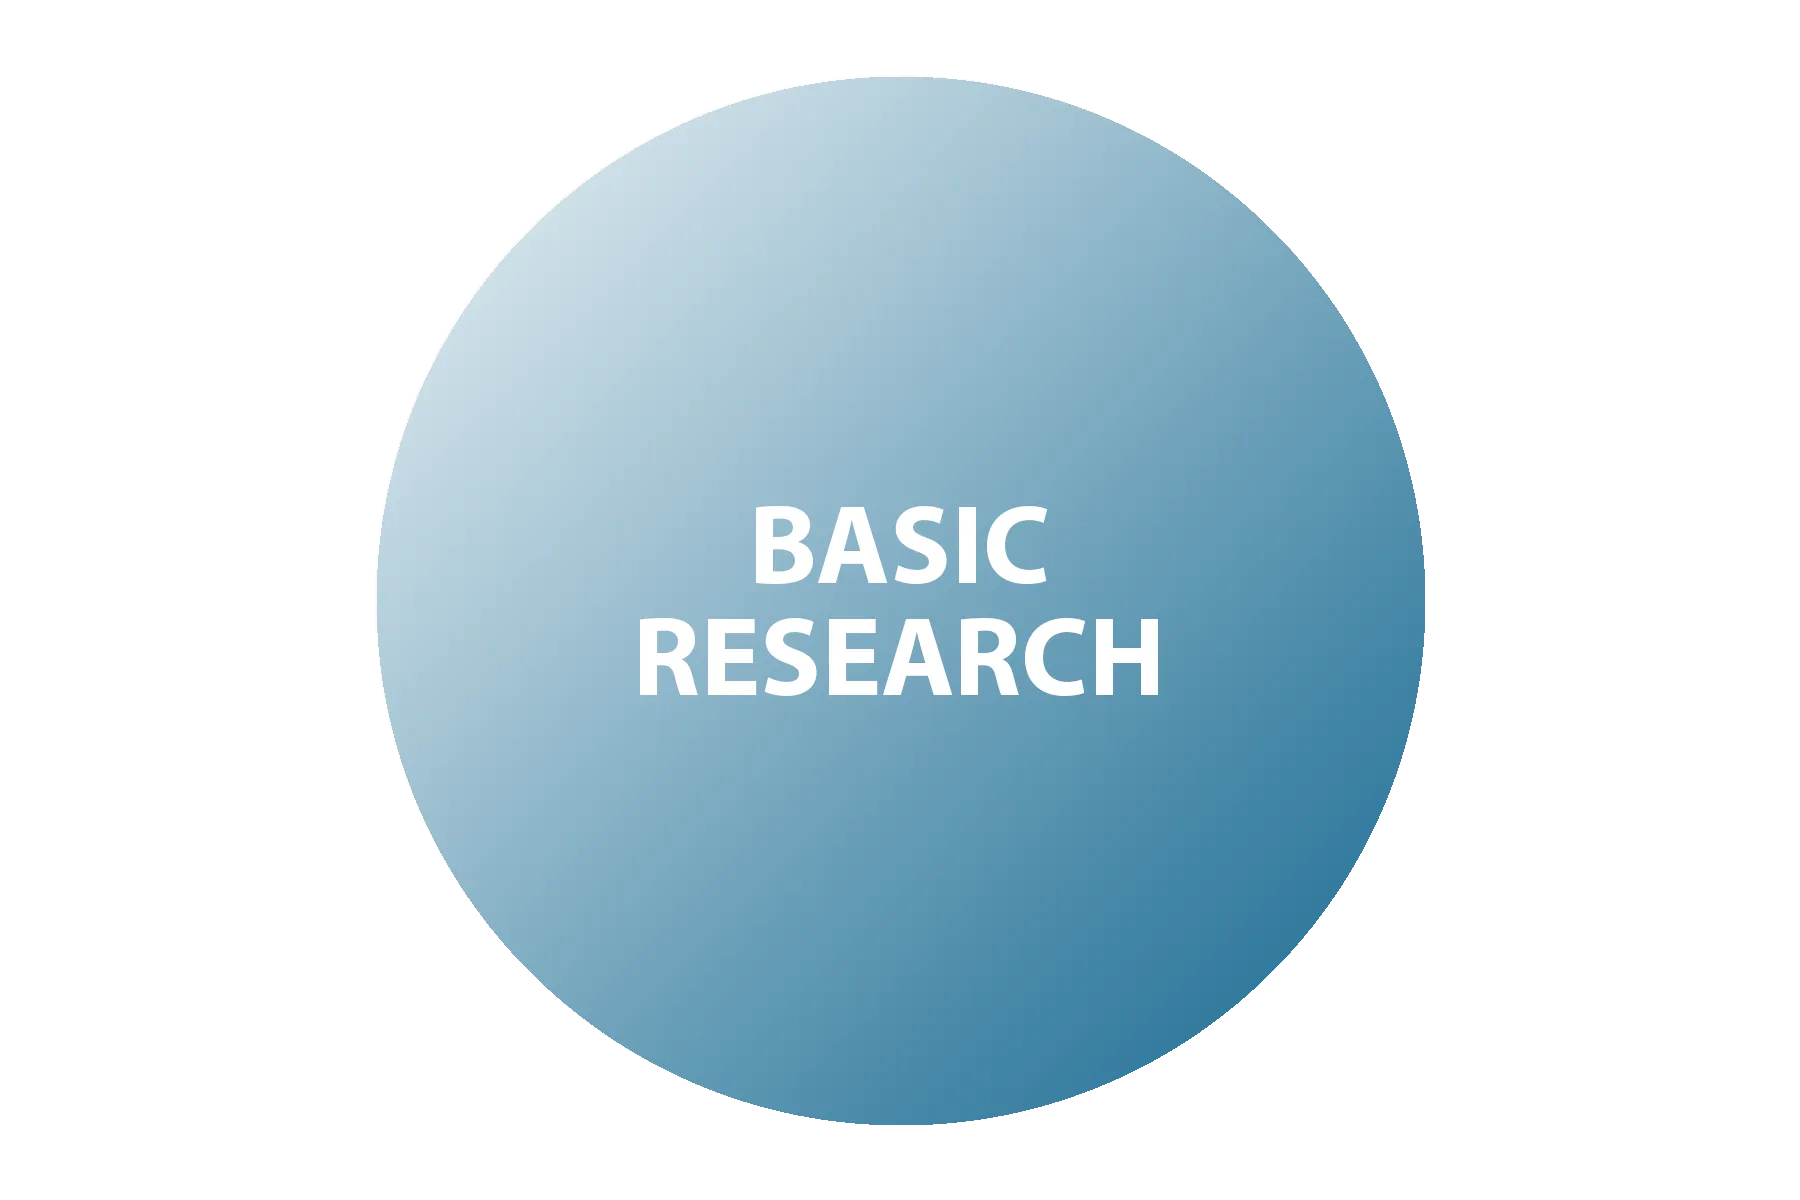 Basic research